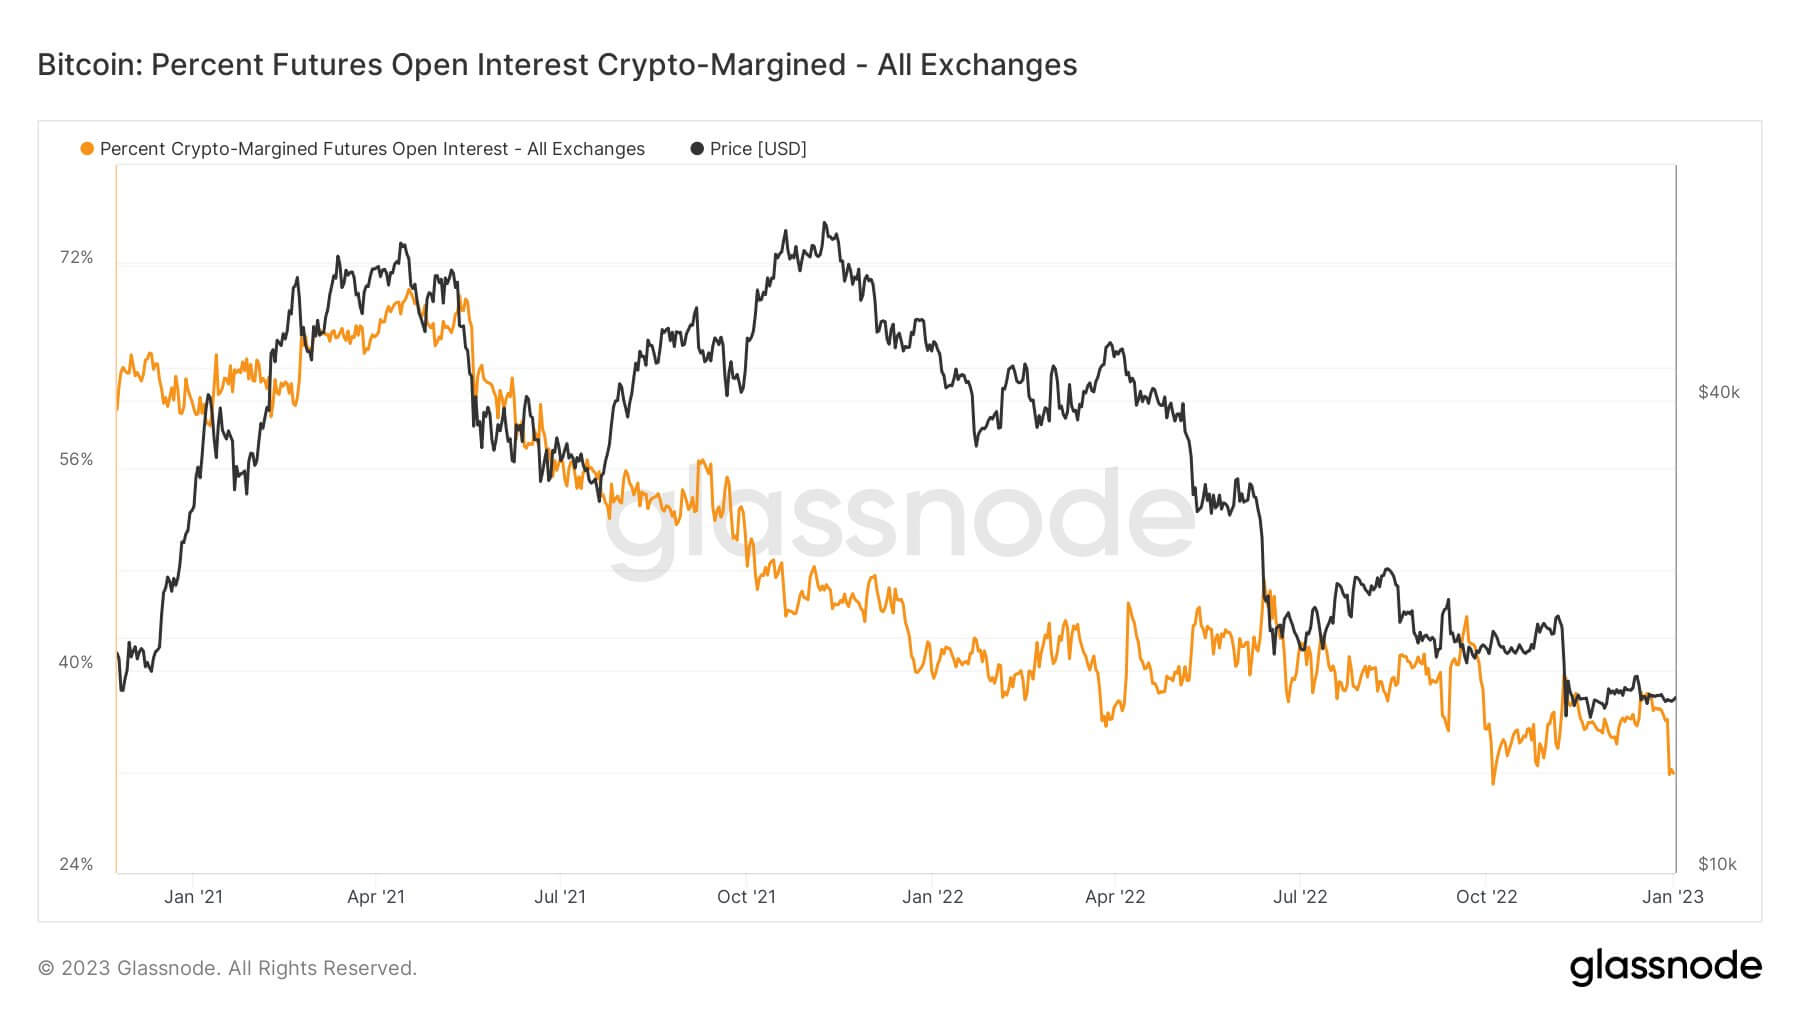 Bitcoin: Percent Futures Open Interest crypto-Margined metric - Source: Glassnode.com